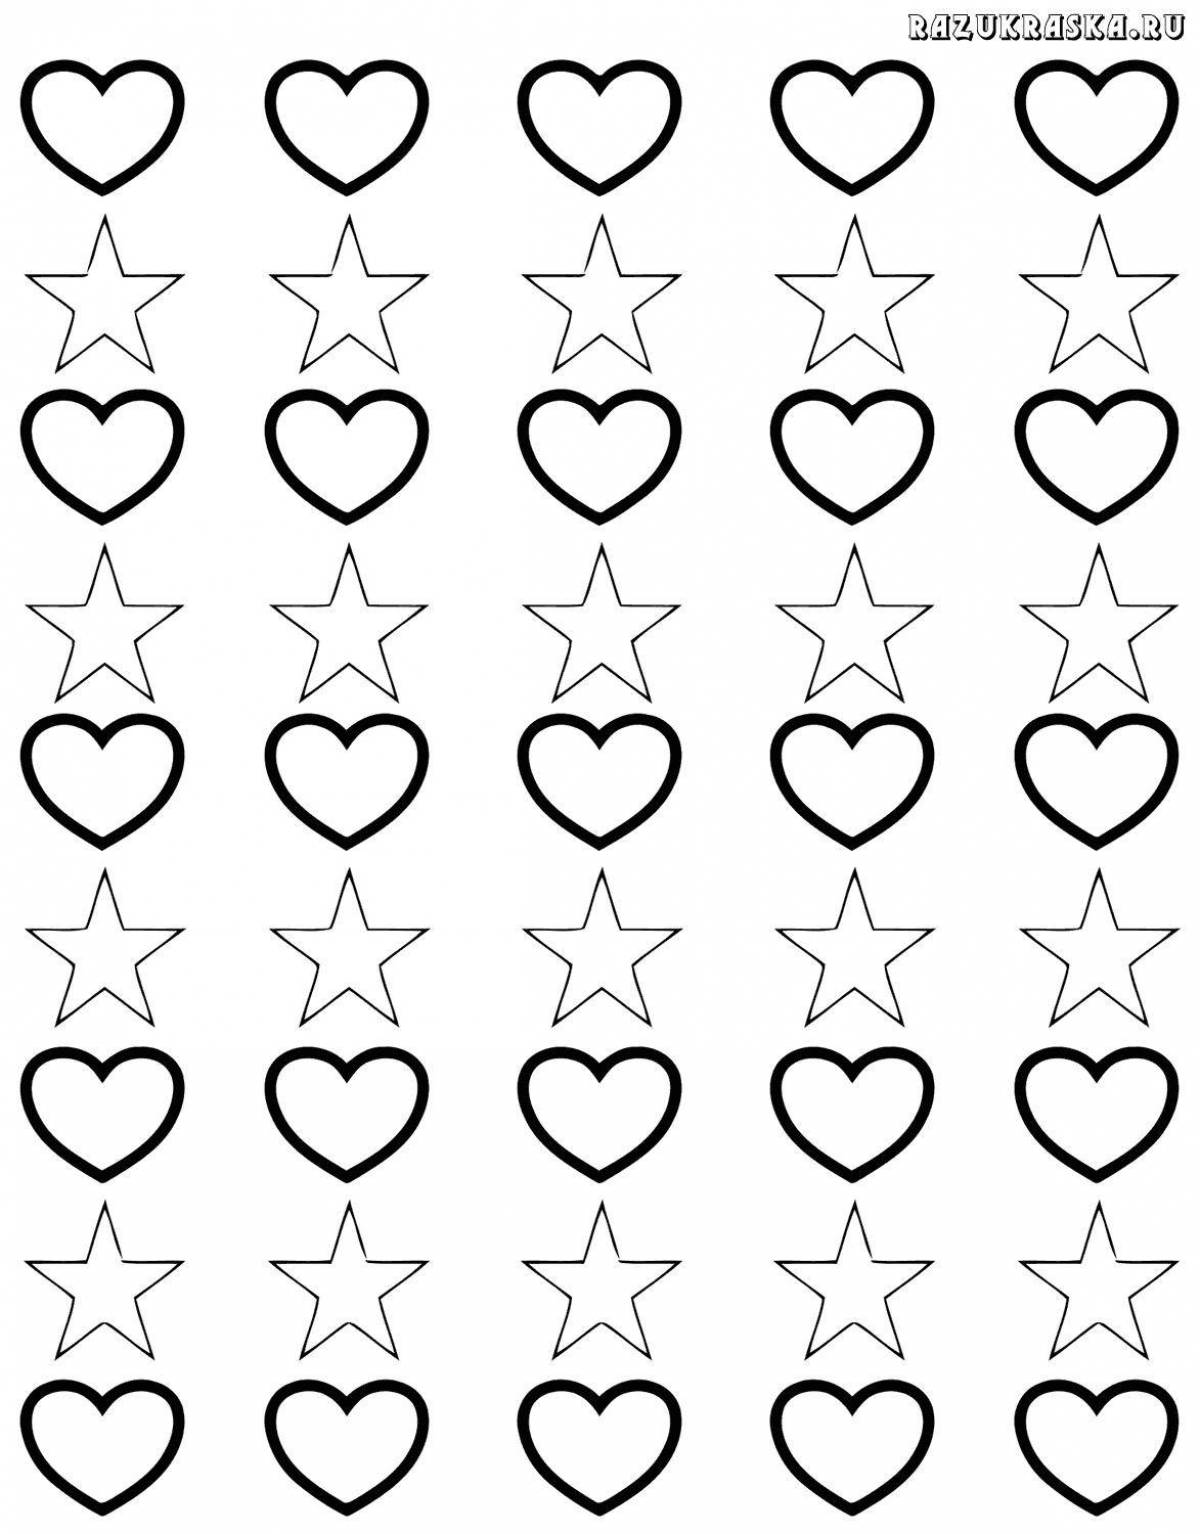 Hearts and stars #2